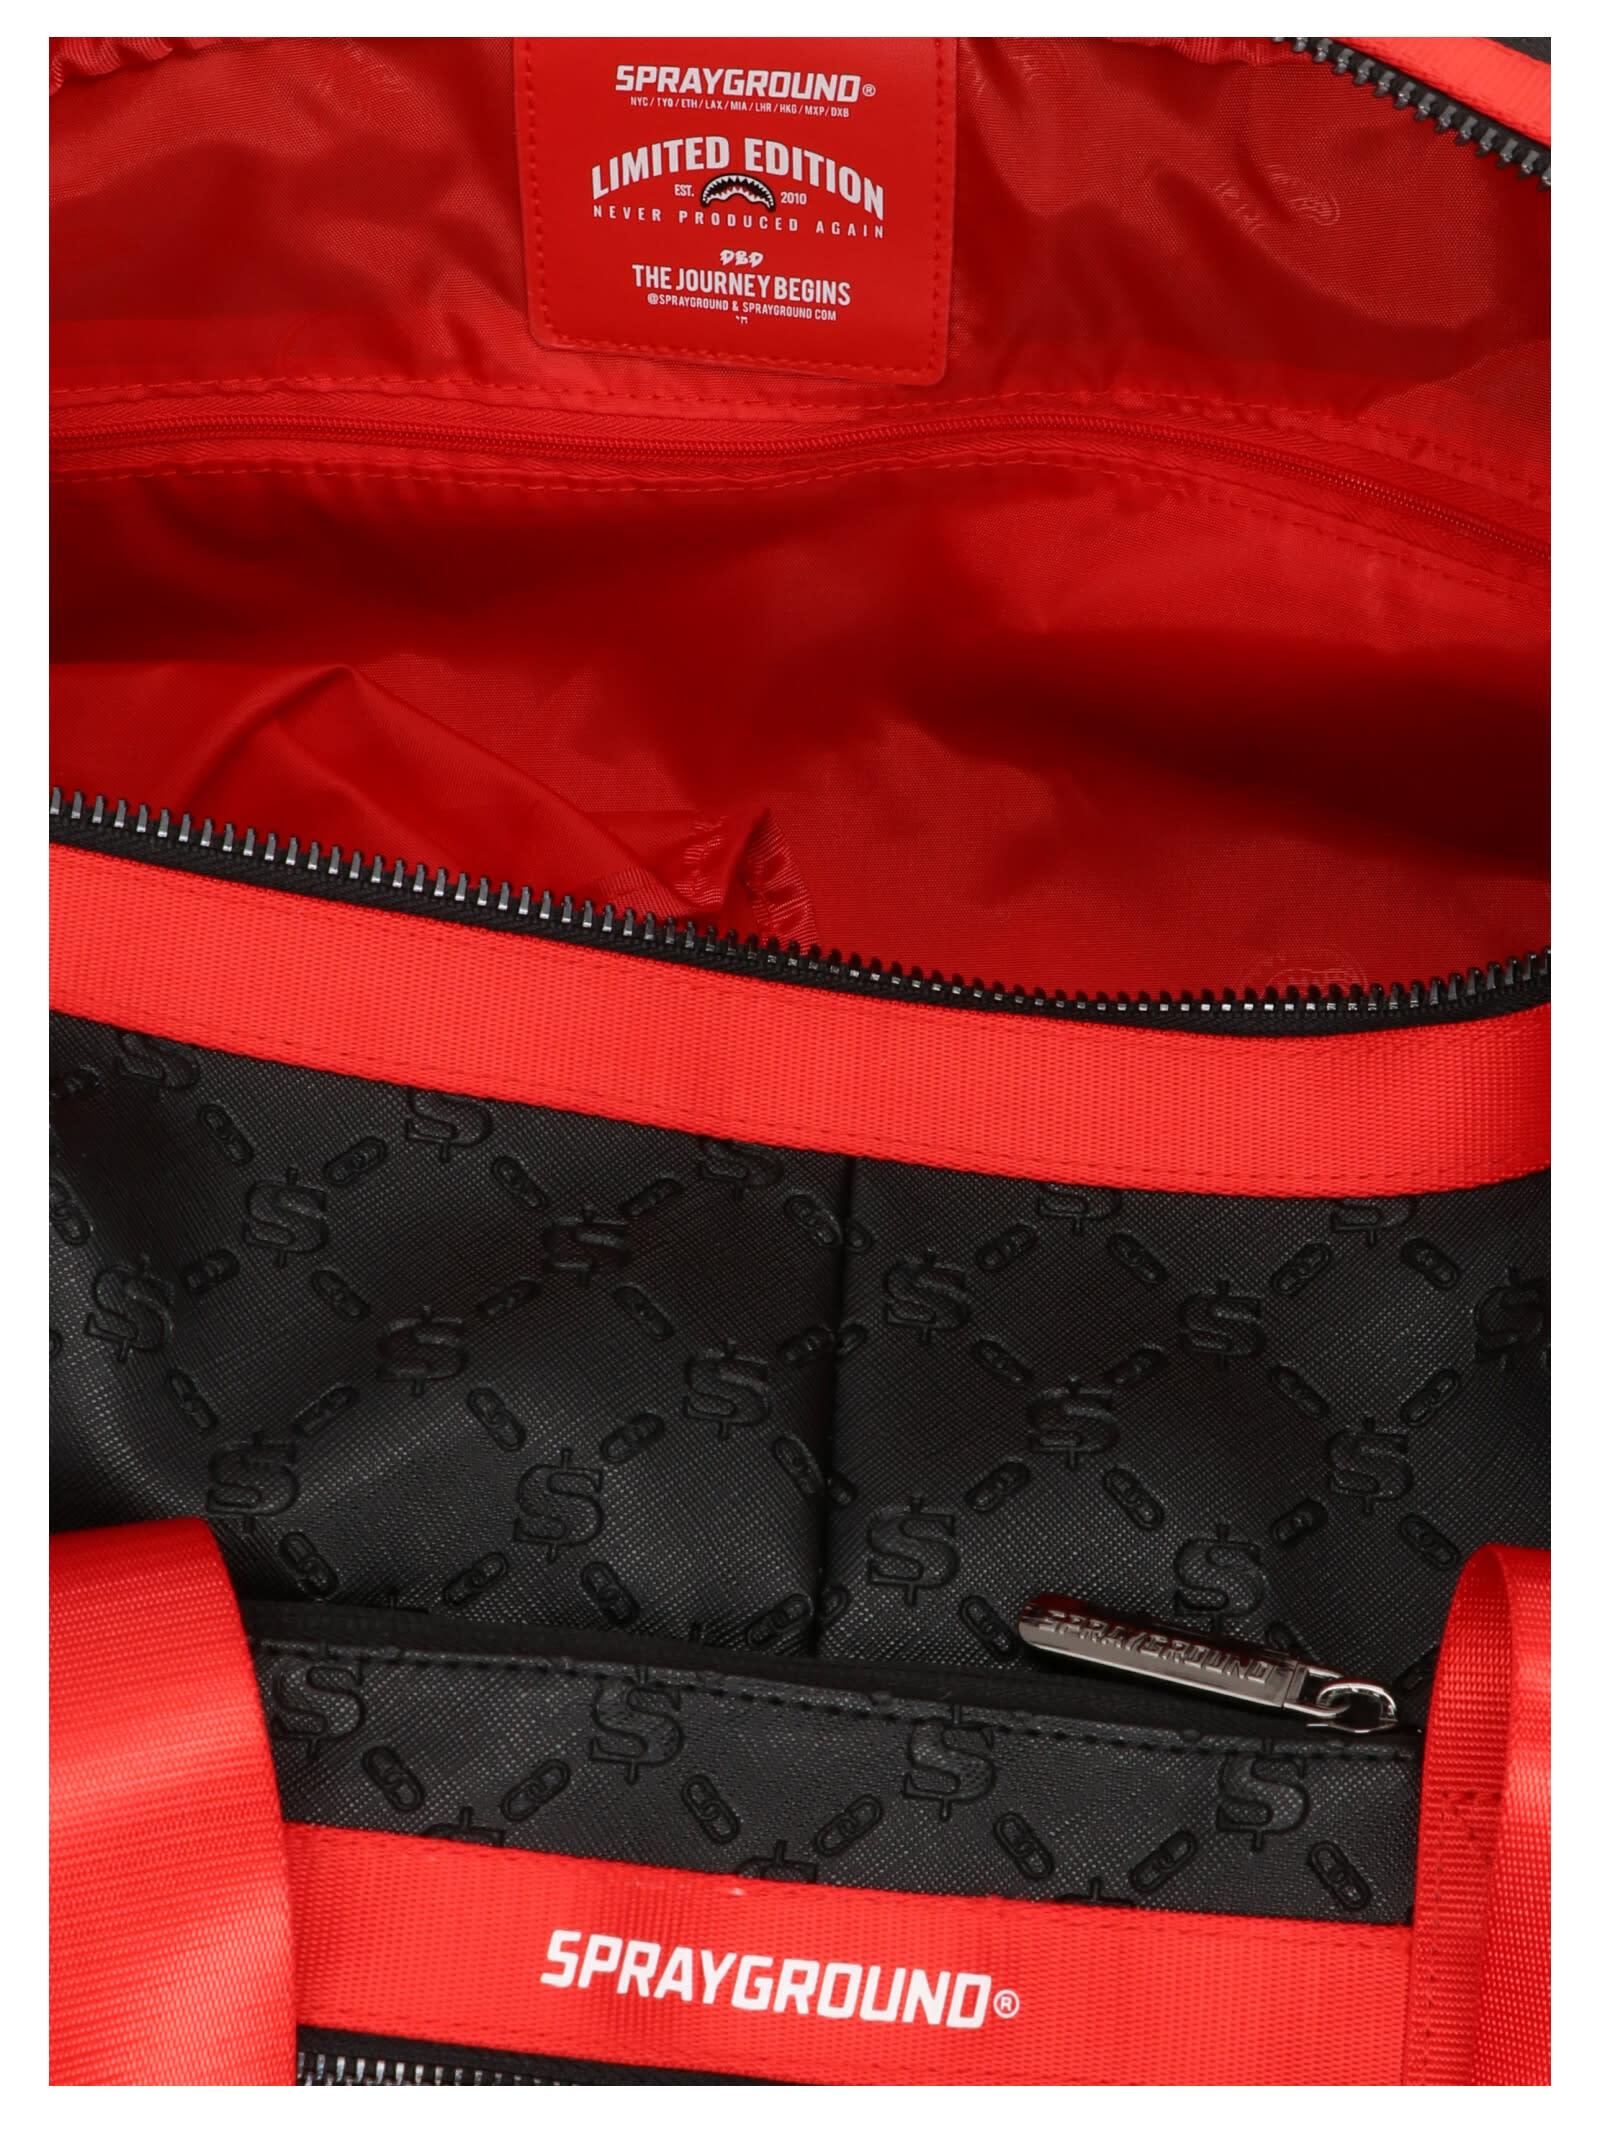 Sprayground Deniro Duffel Bag in Red for Men